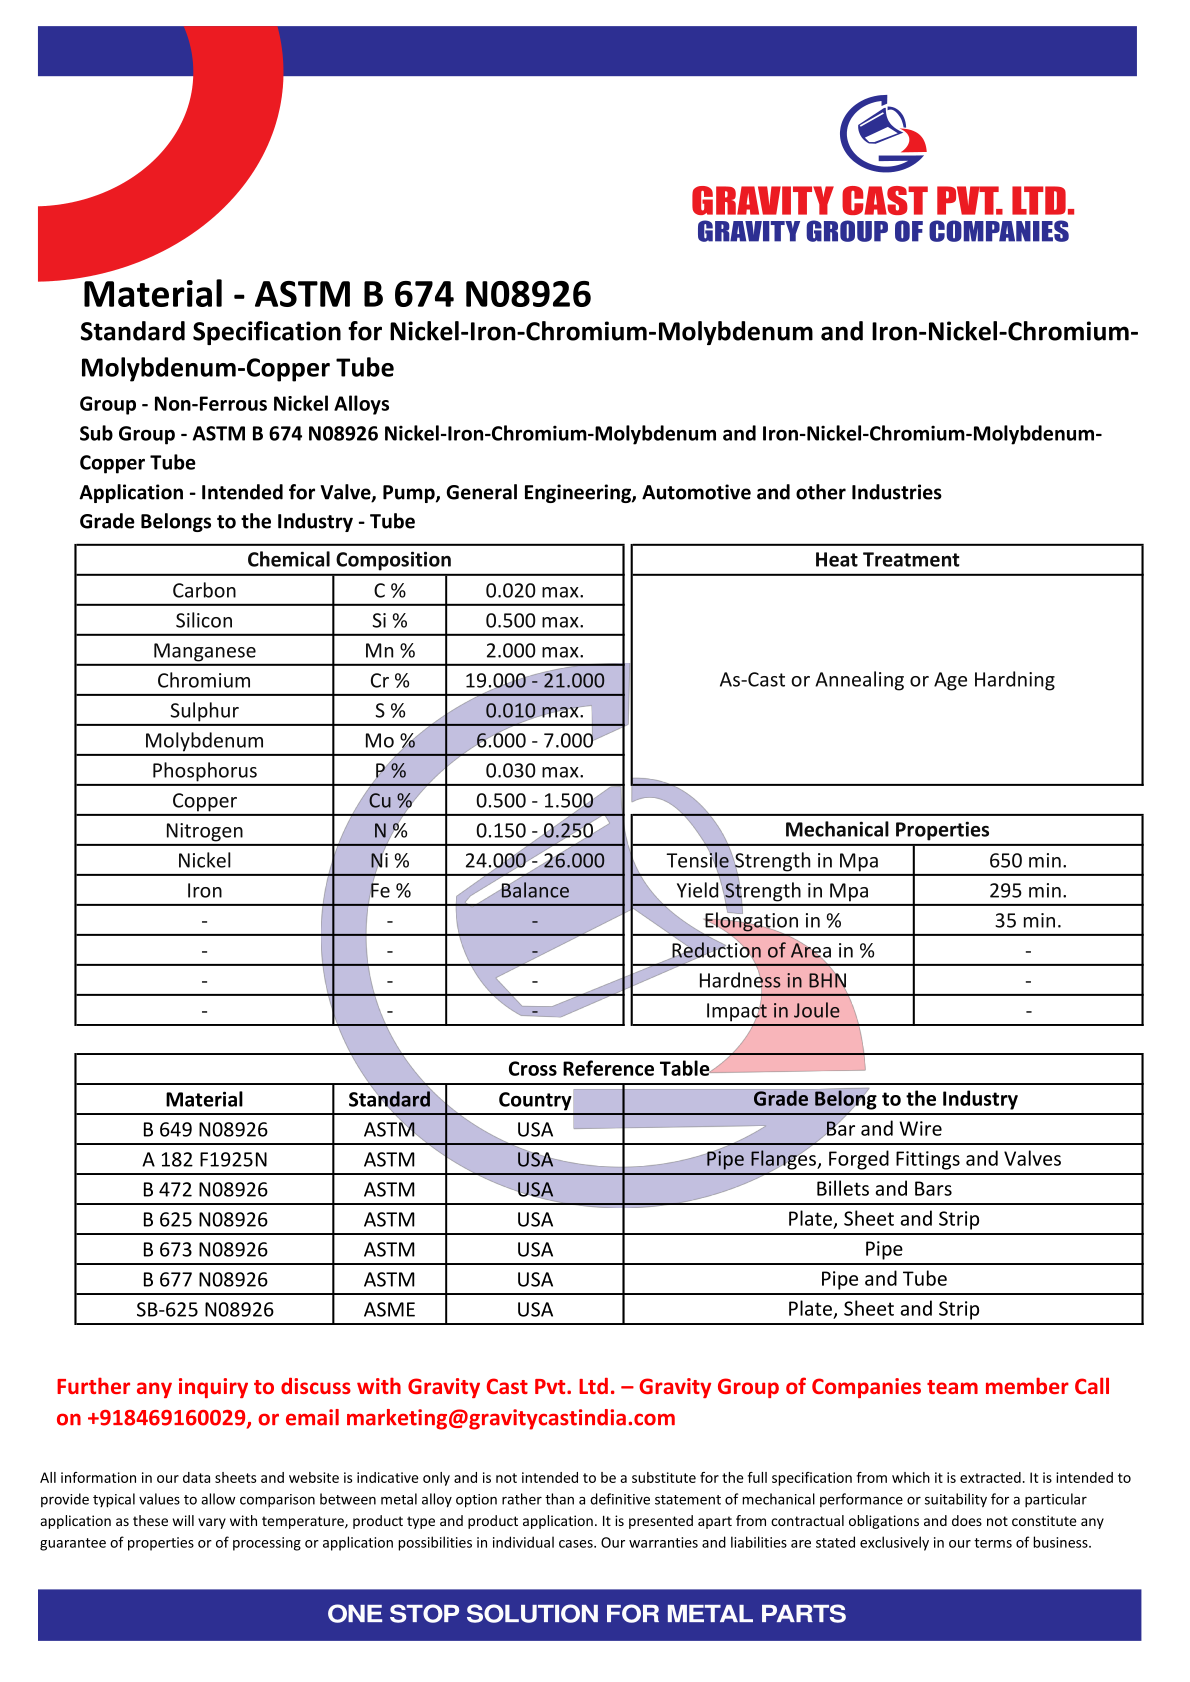 ASTM B 674 N08926.pdf